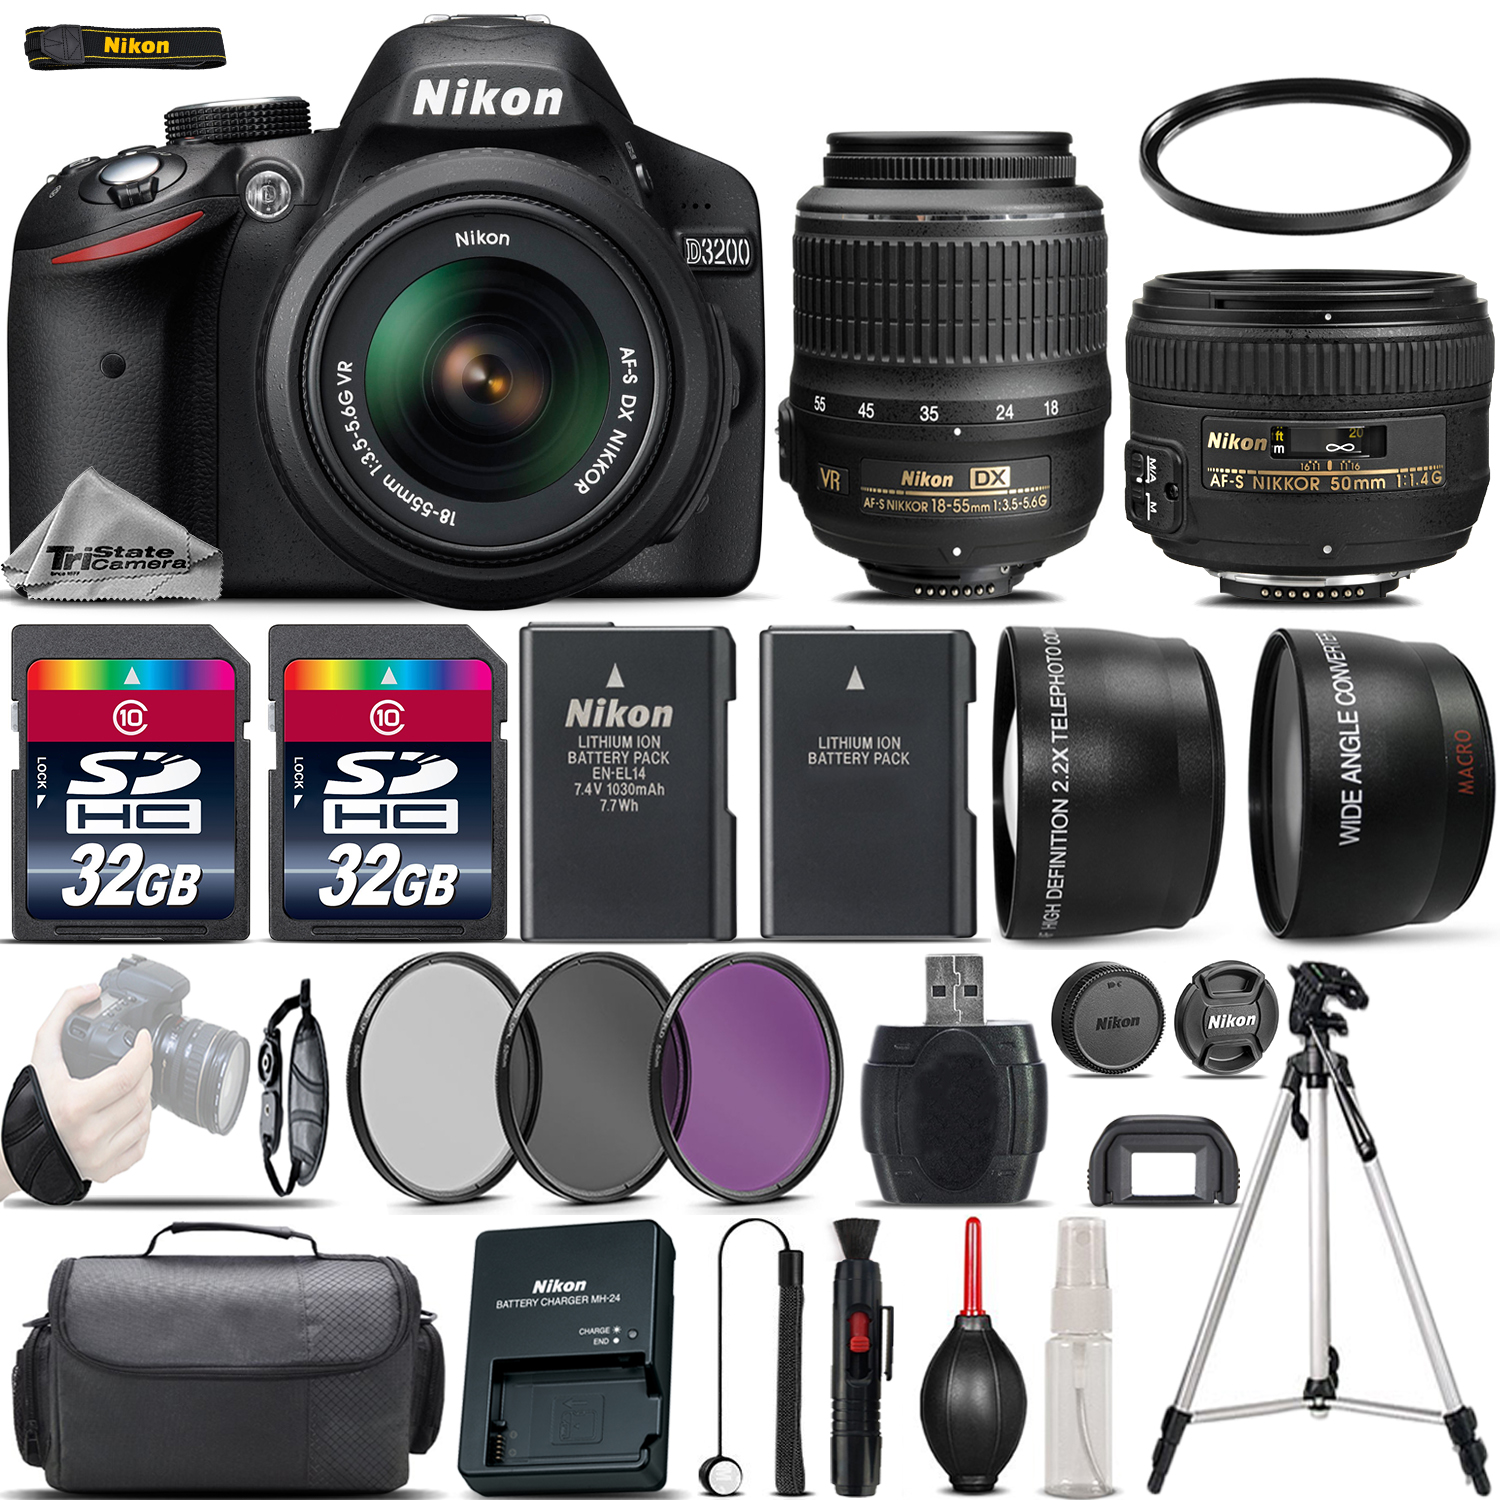 D3200 Digital SLR Camera + 18-55mm VR + 50mm 1.4G Lens + 64GB - 4 Lens Kit *FREE SHIPPING*